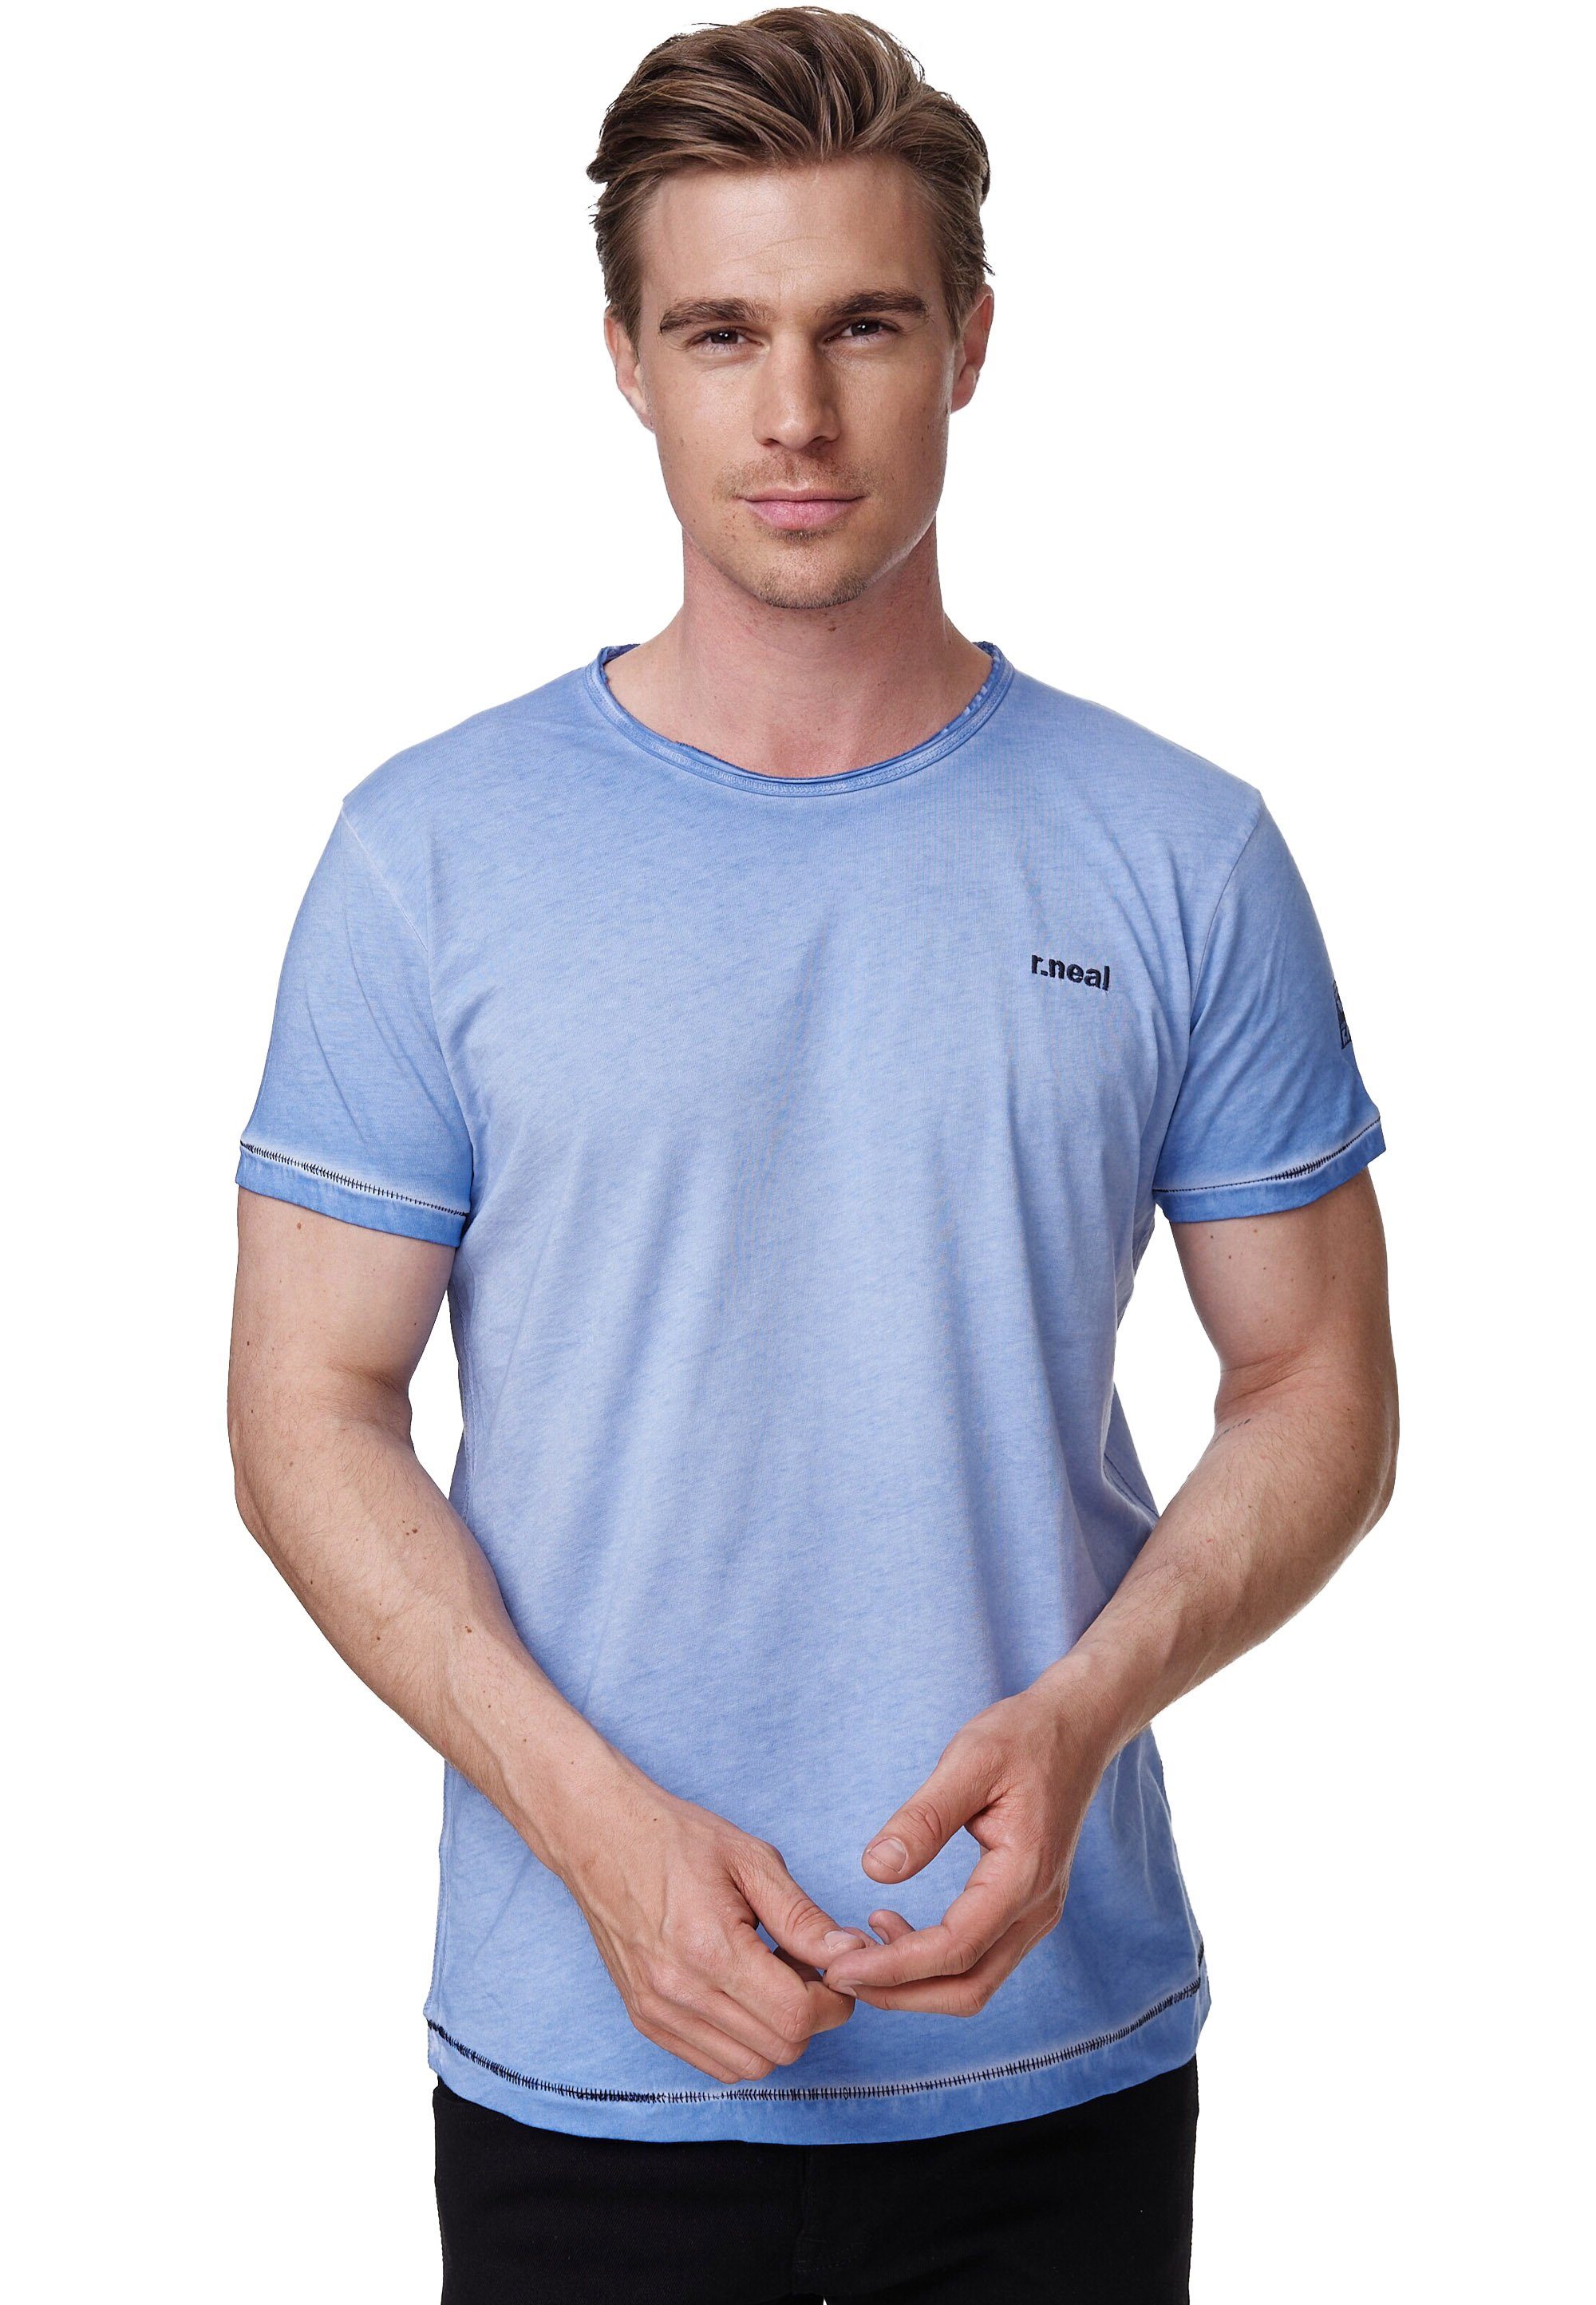 Diskont Rusty Neal T-Shirt im blau trendigen Vintage-Look